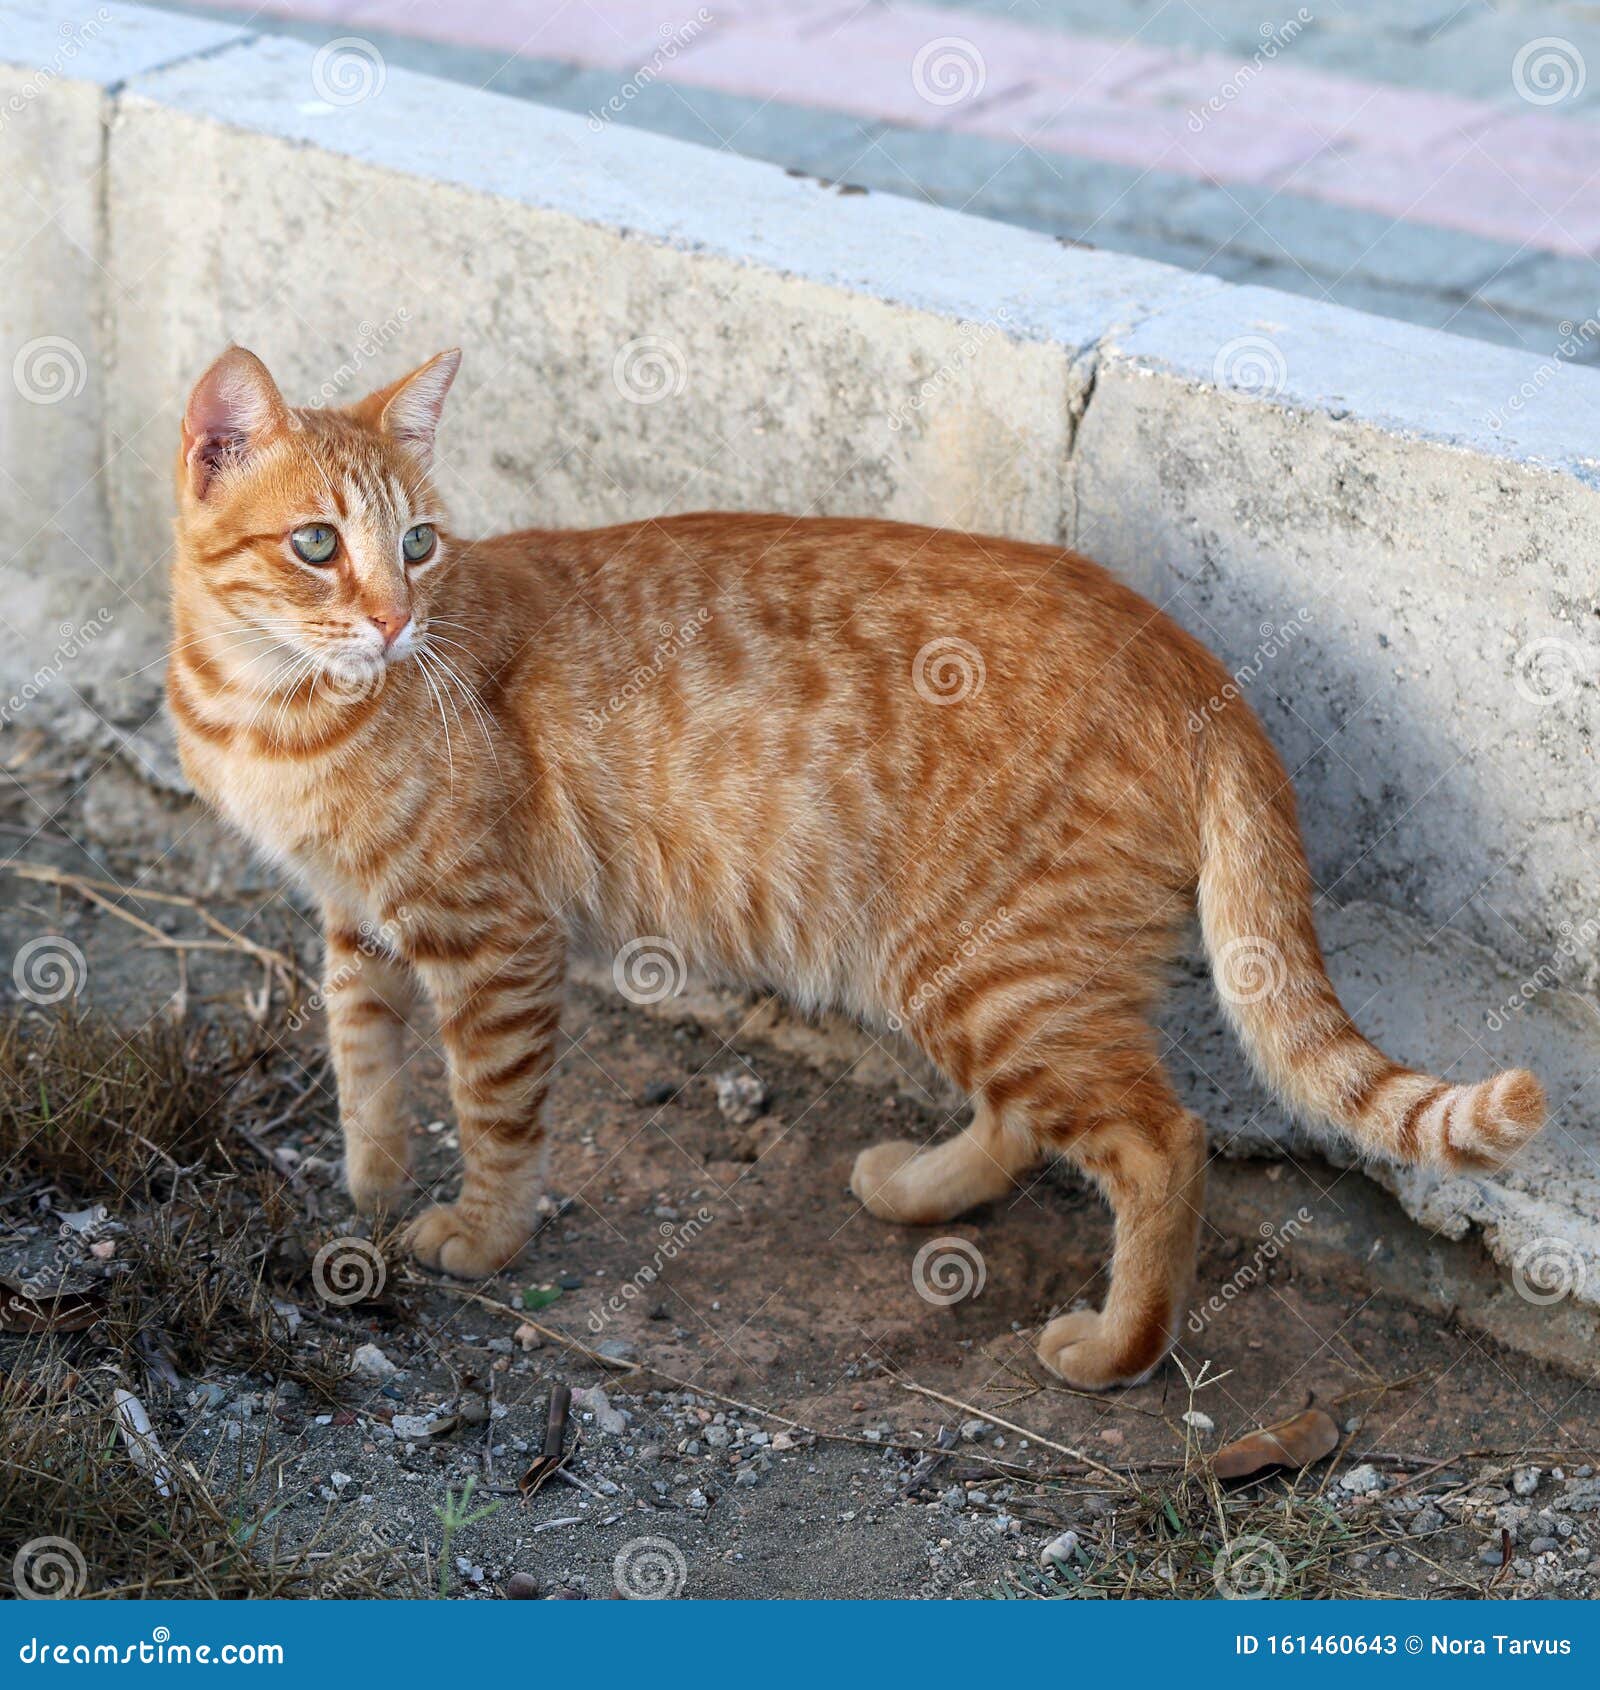 Wild Striped Orange-Colored Cat Looking Alert in Cyprus Stock Image ...